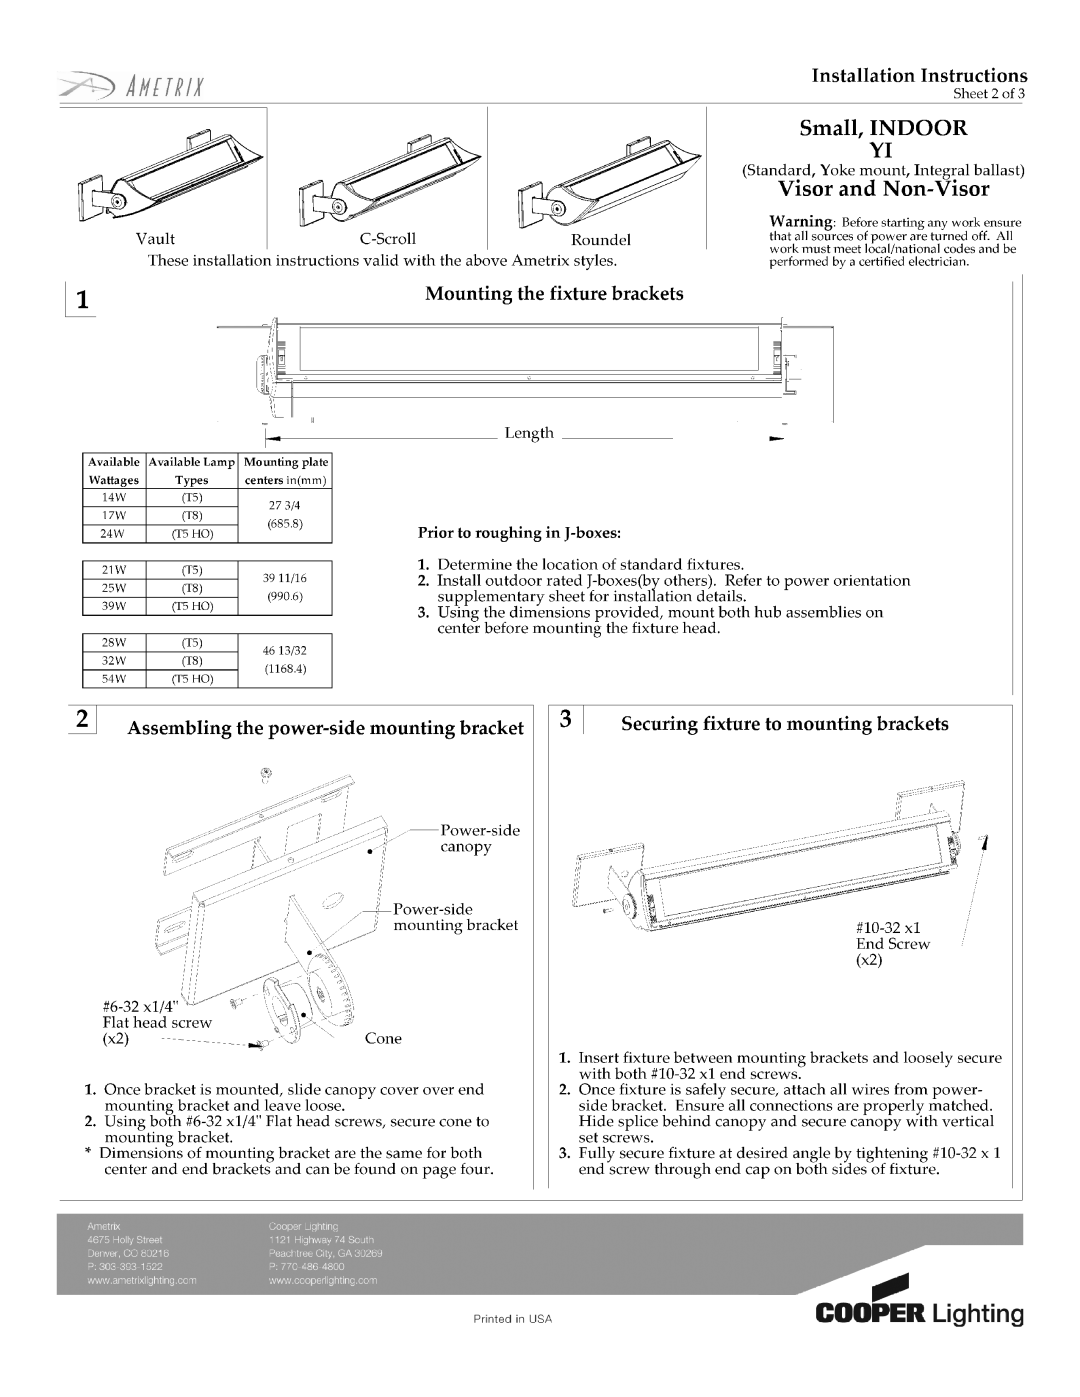 Cooper Lighting ADY071452 manual 